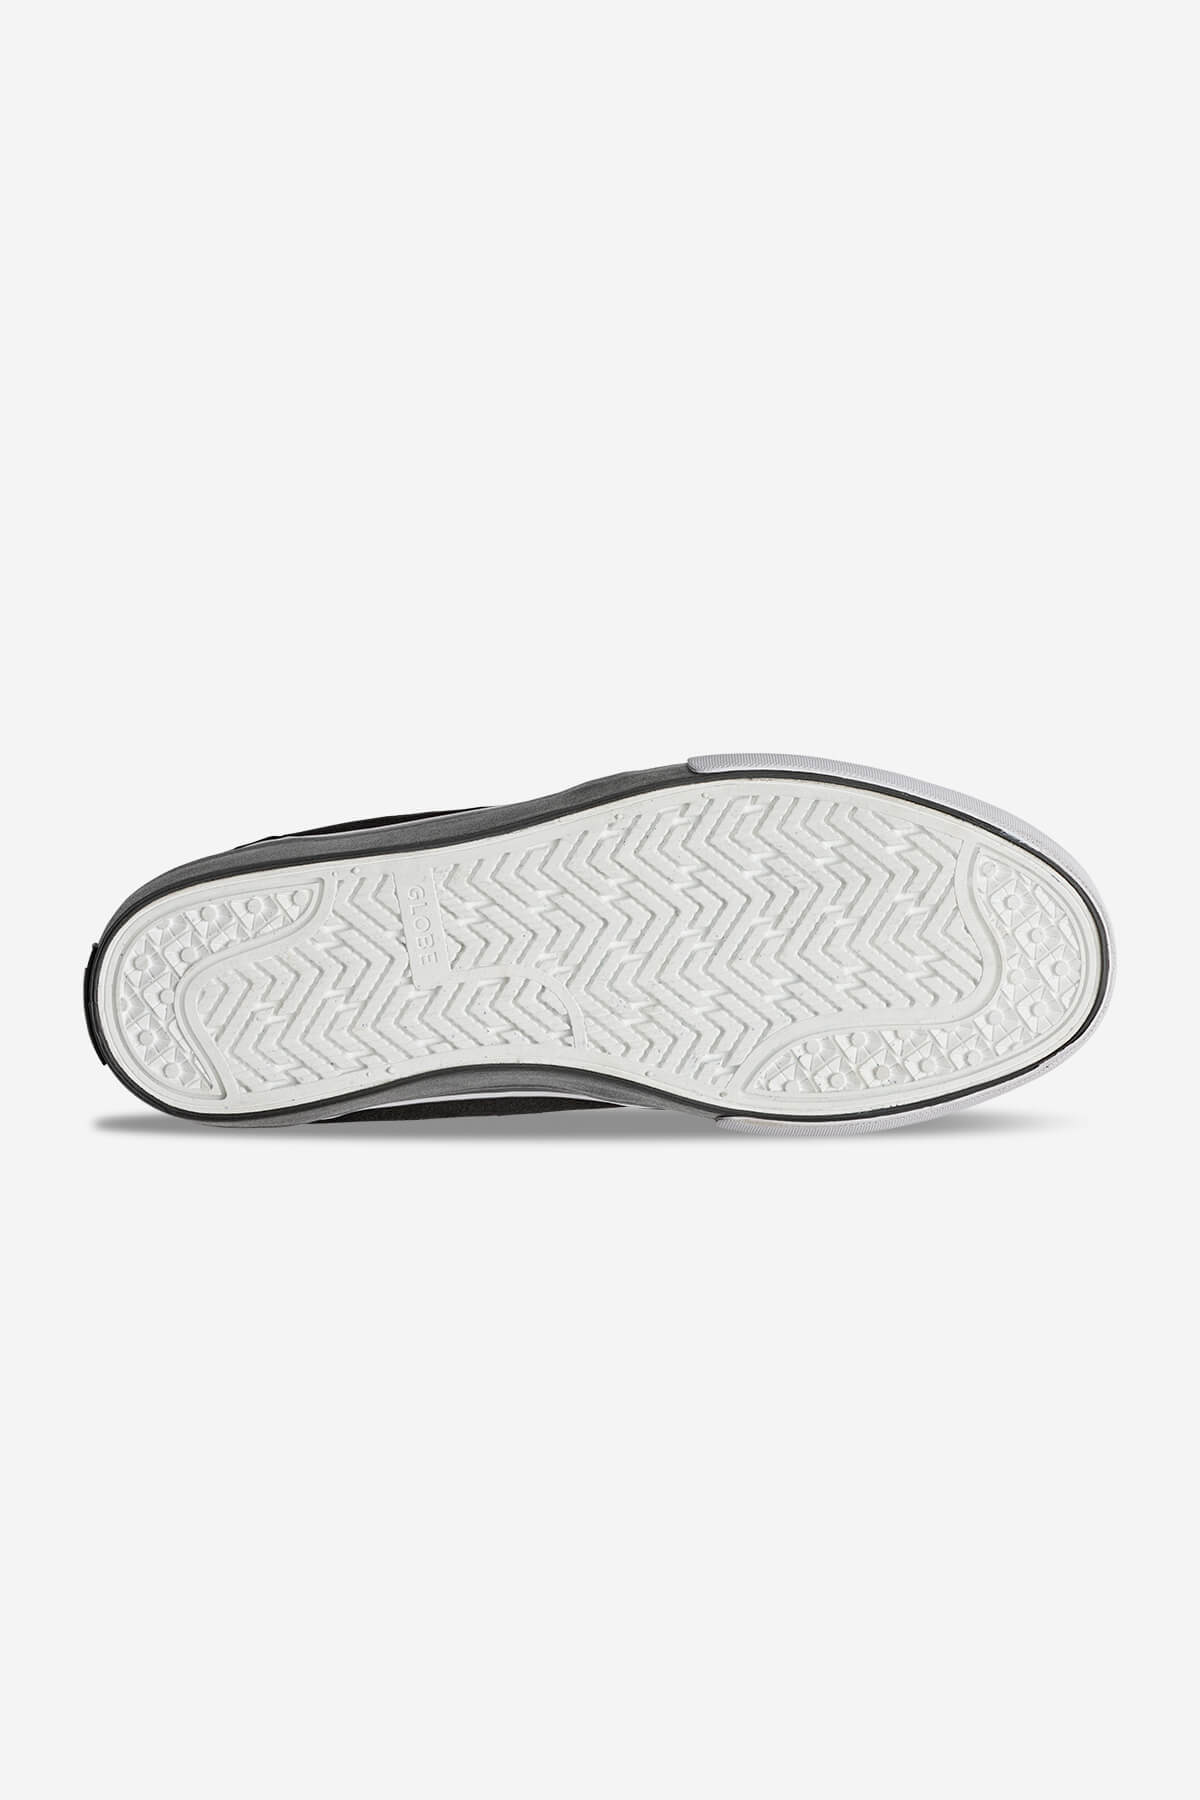 Globe - Zapatos Mahalo - Black/Black/White - skateboard